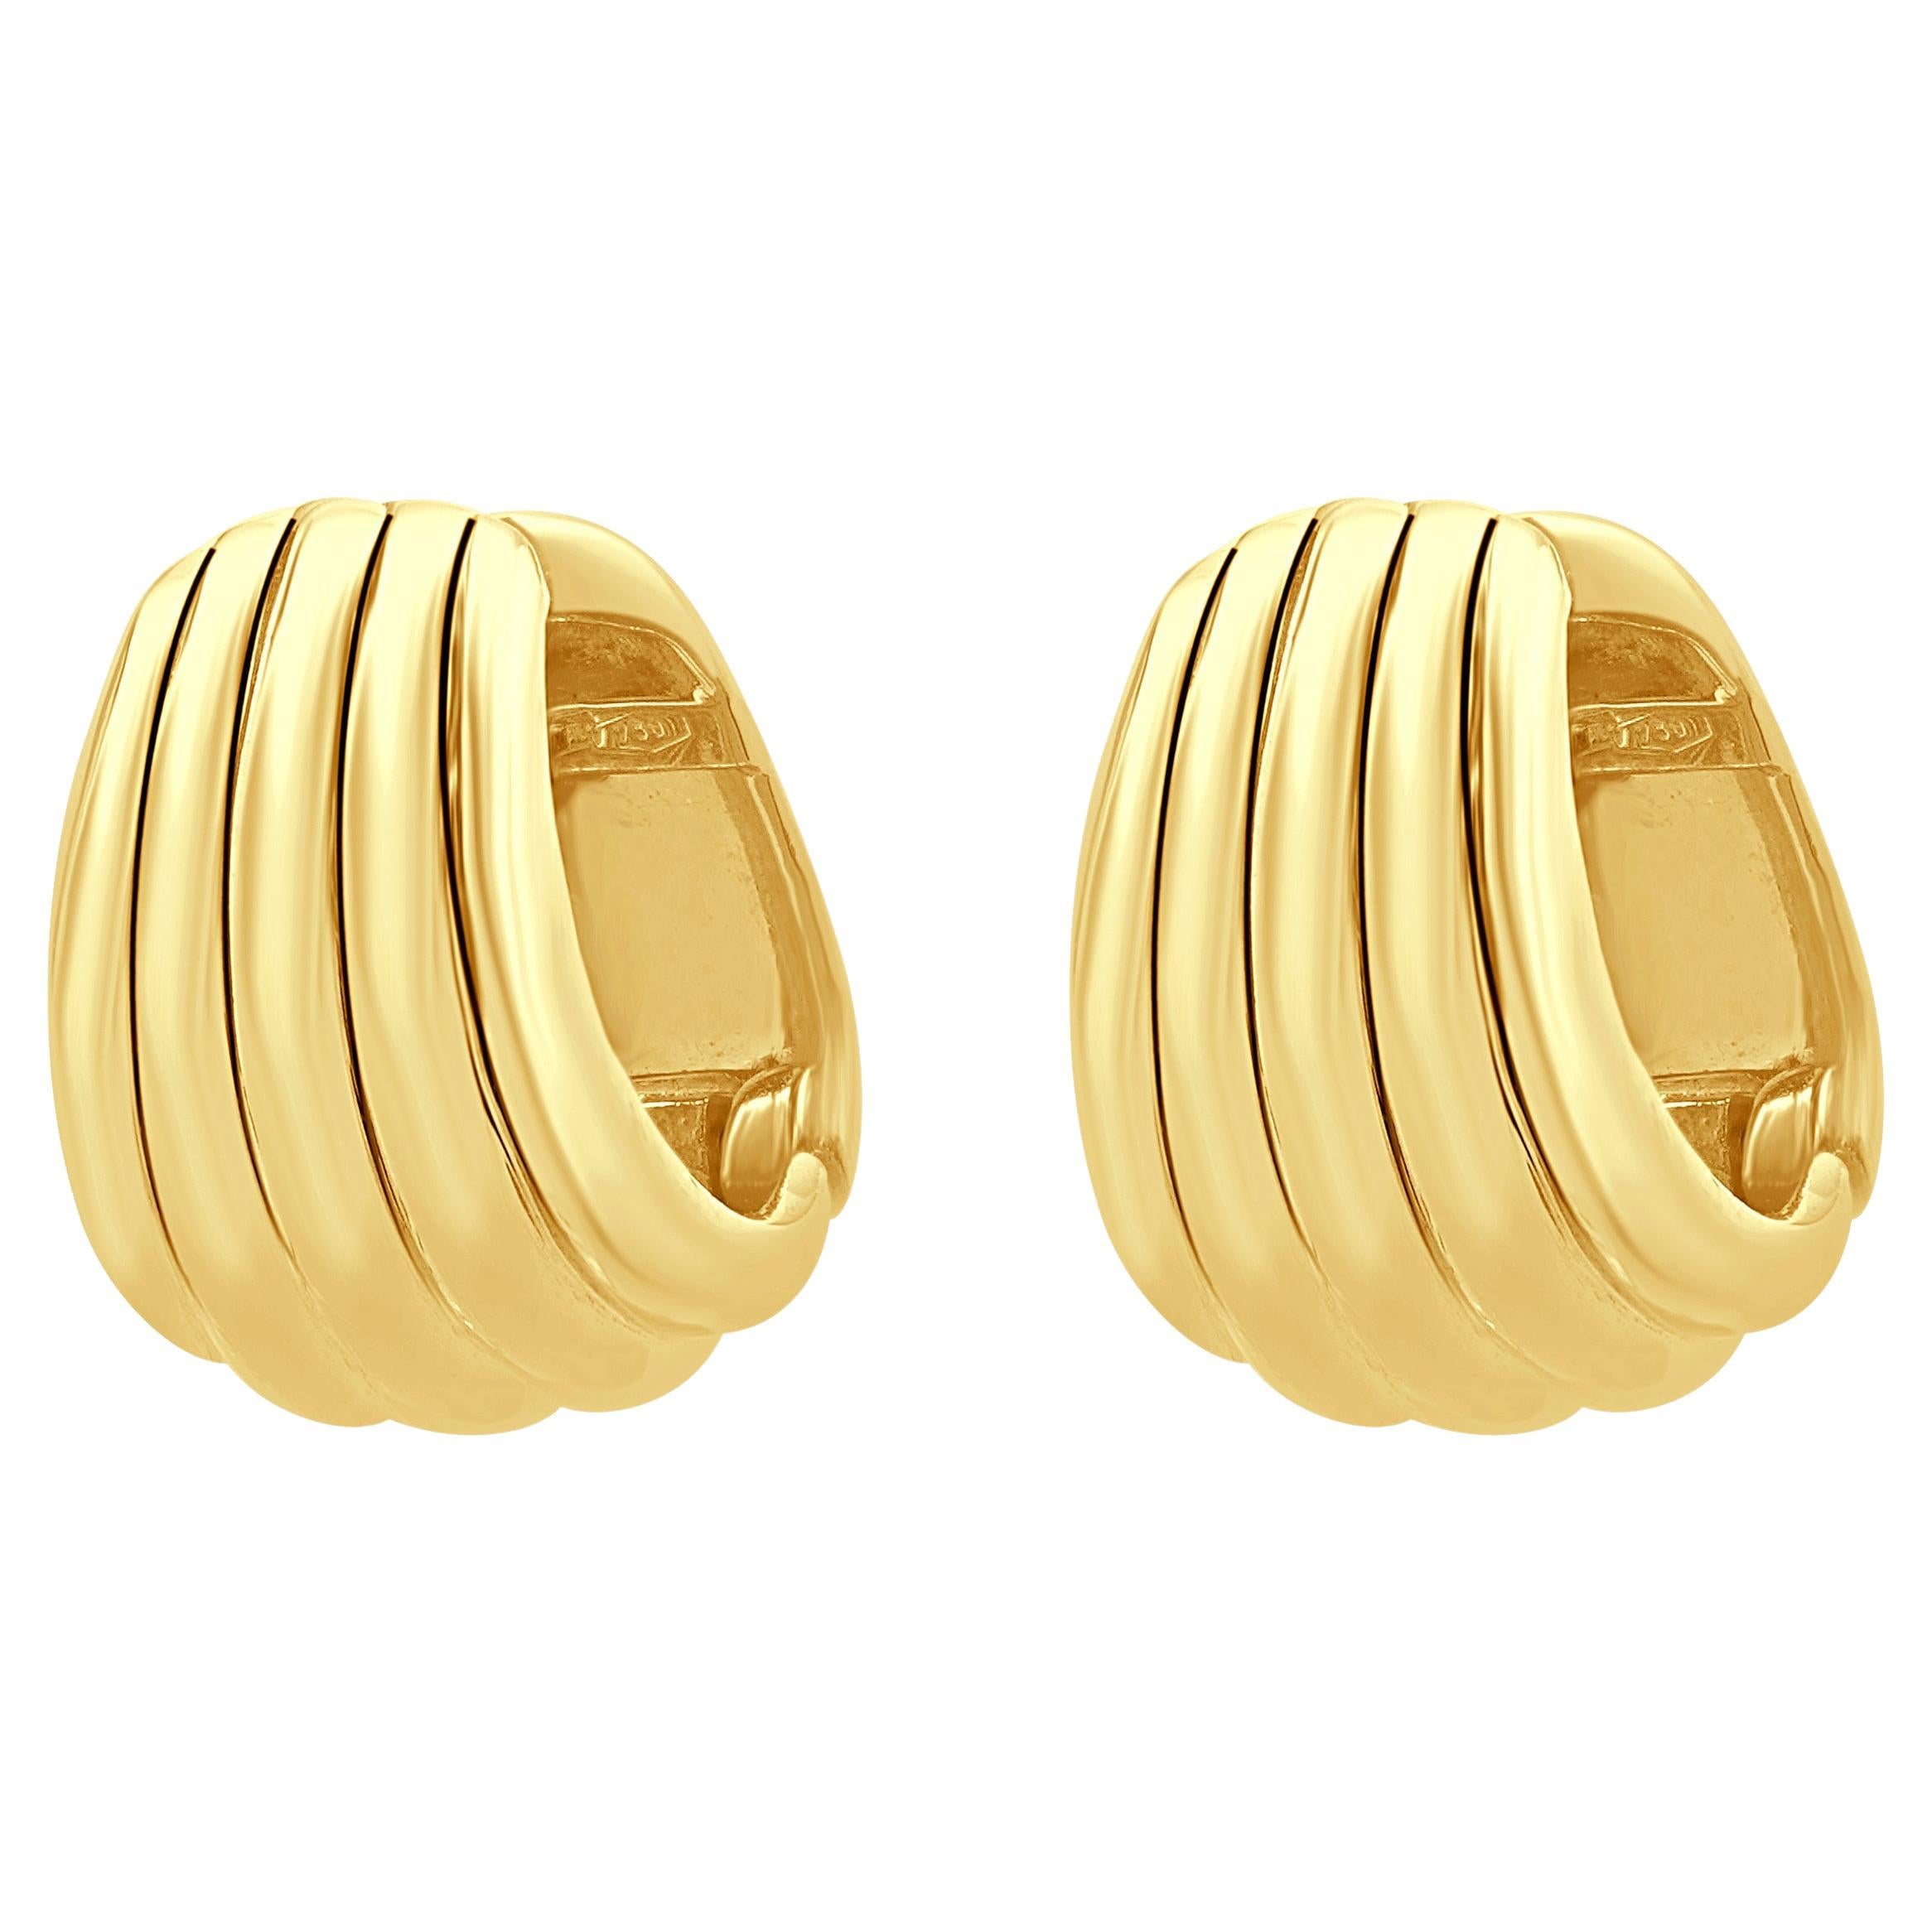 18 Karat Yellow Gold Shell Earrings